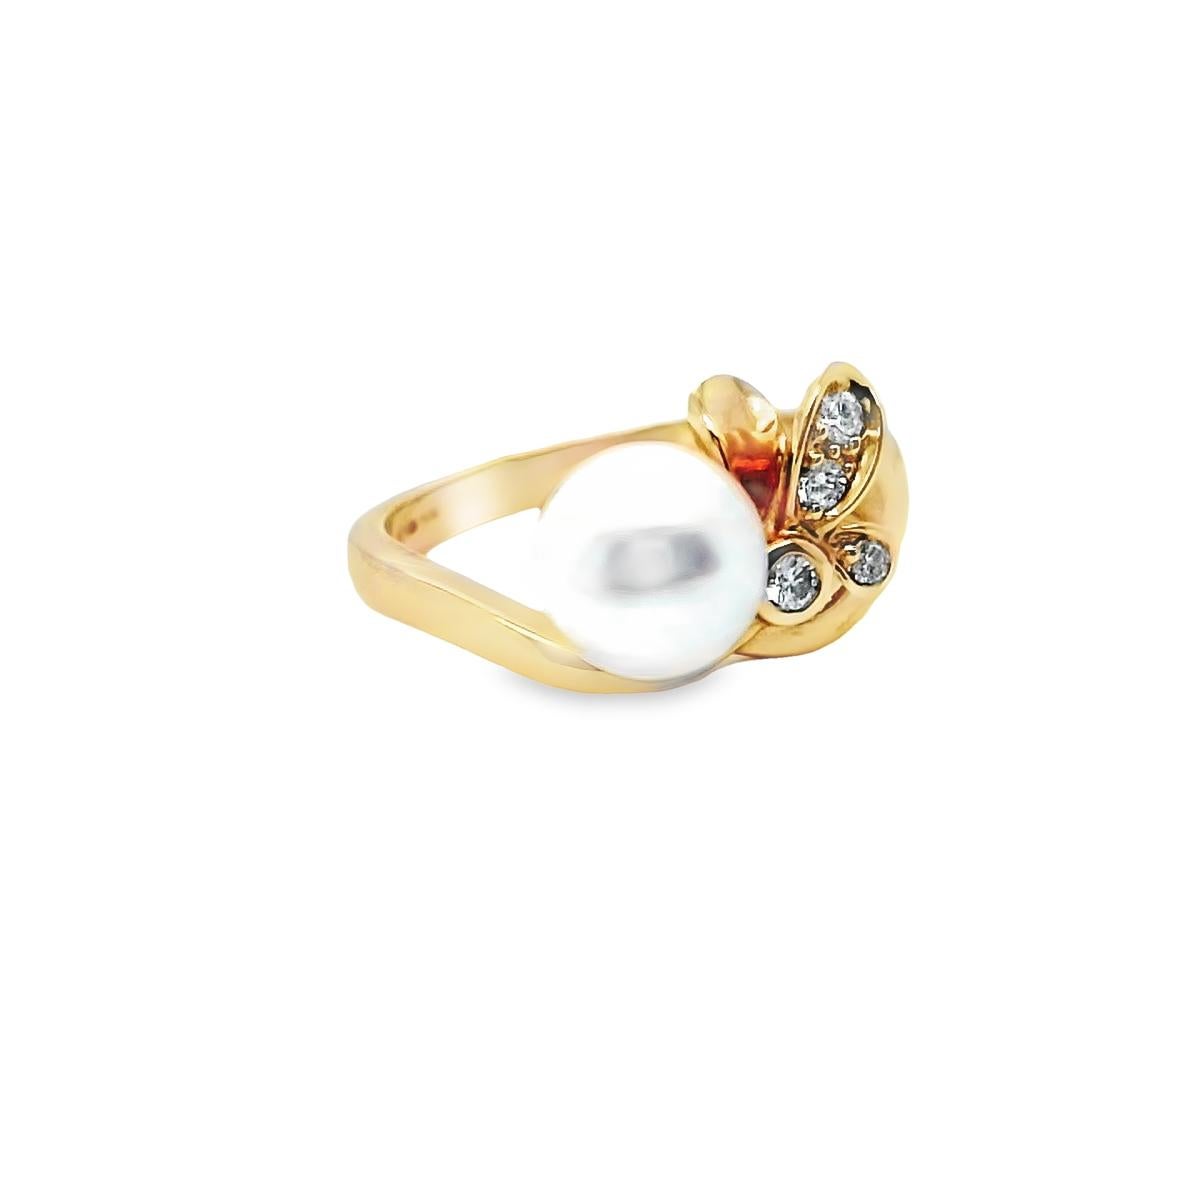 Mikimoto rose gold Pearl & Diamond ring PRH5473Z2 For Sale 1